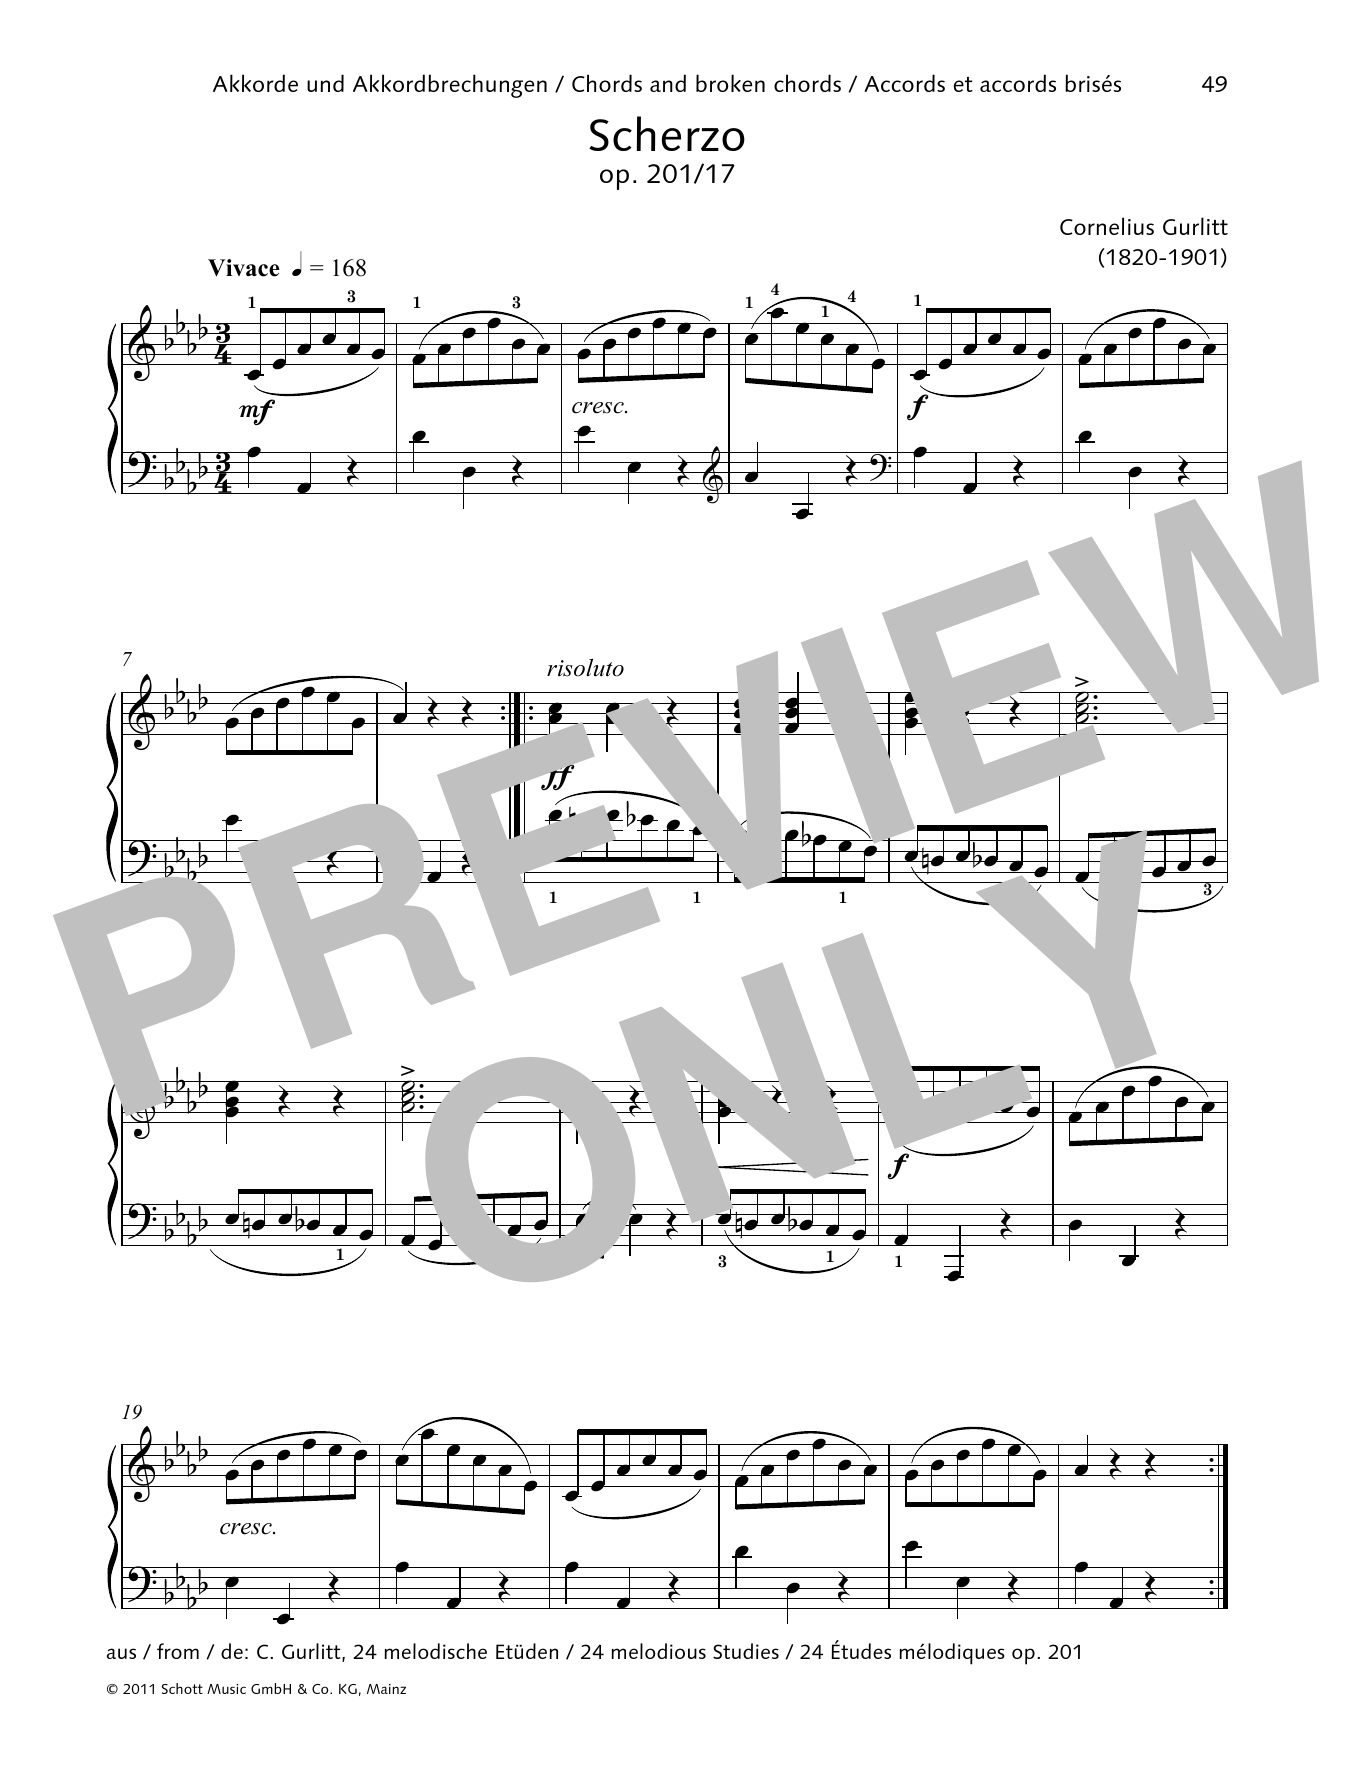 Cornelius Gurlitt Scherzo Sheet Music Notes & Chords for Piano Solo - Download or Print PDF